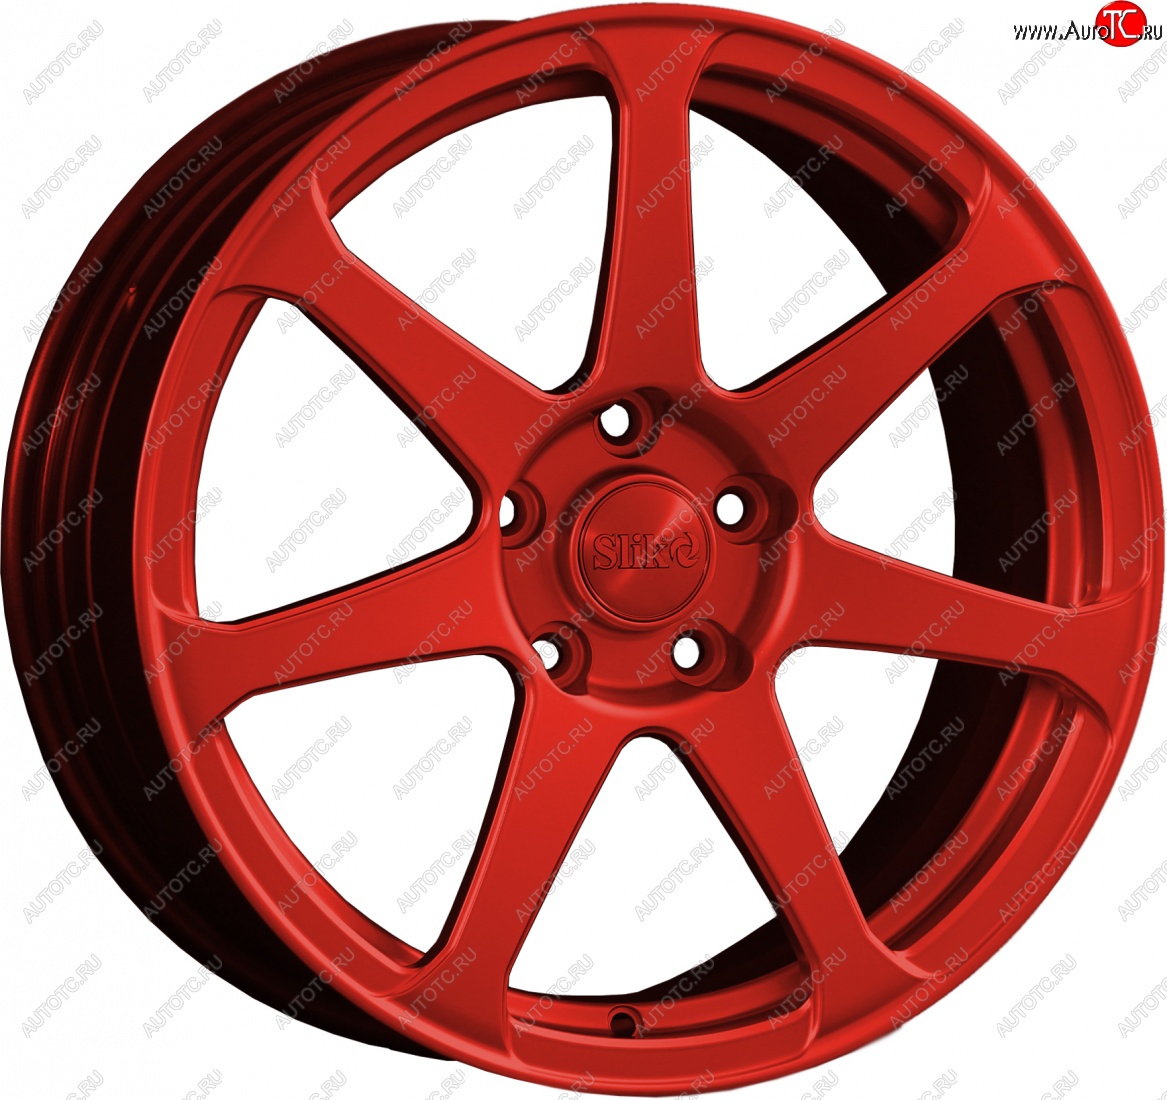 14 599 р. Кованый диск Slik classik R17x7.5 Красный (RED) 7.5x17 Chevrolet Malibu 8 (2013-2015) 5x110.0xDIA65.1xET40.0 (Цвет: RED)